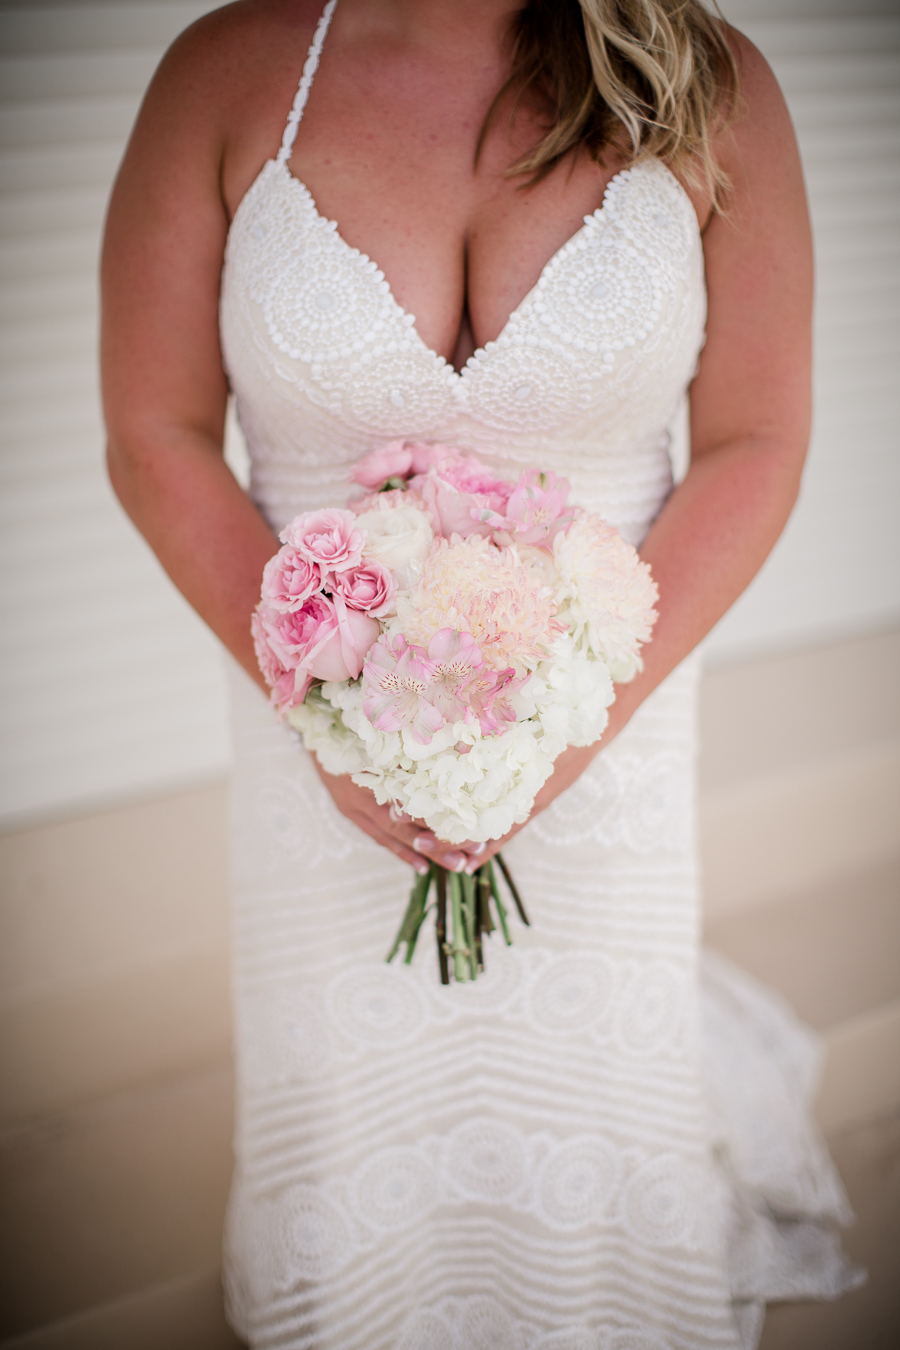 Flower arrangement with dress at this Daytona Beach Wedding by Destination Wedding Photographer, Amanda May Photos.